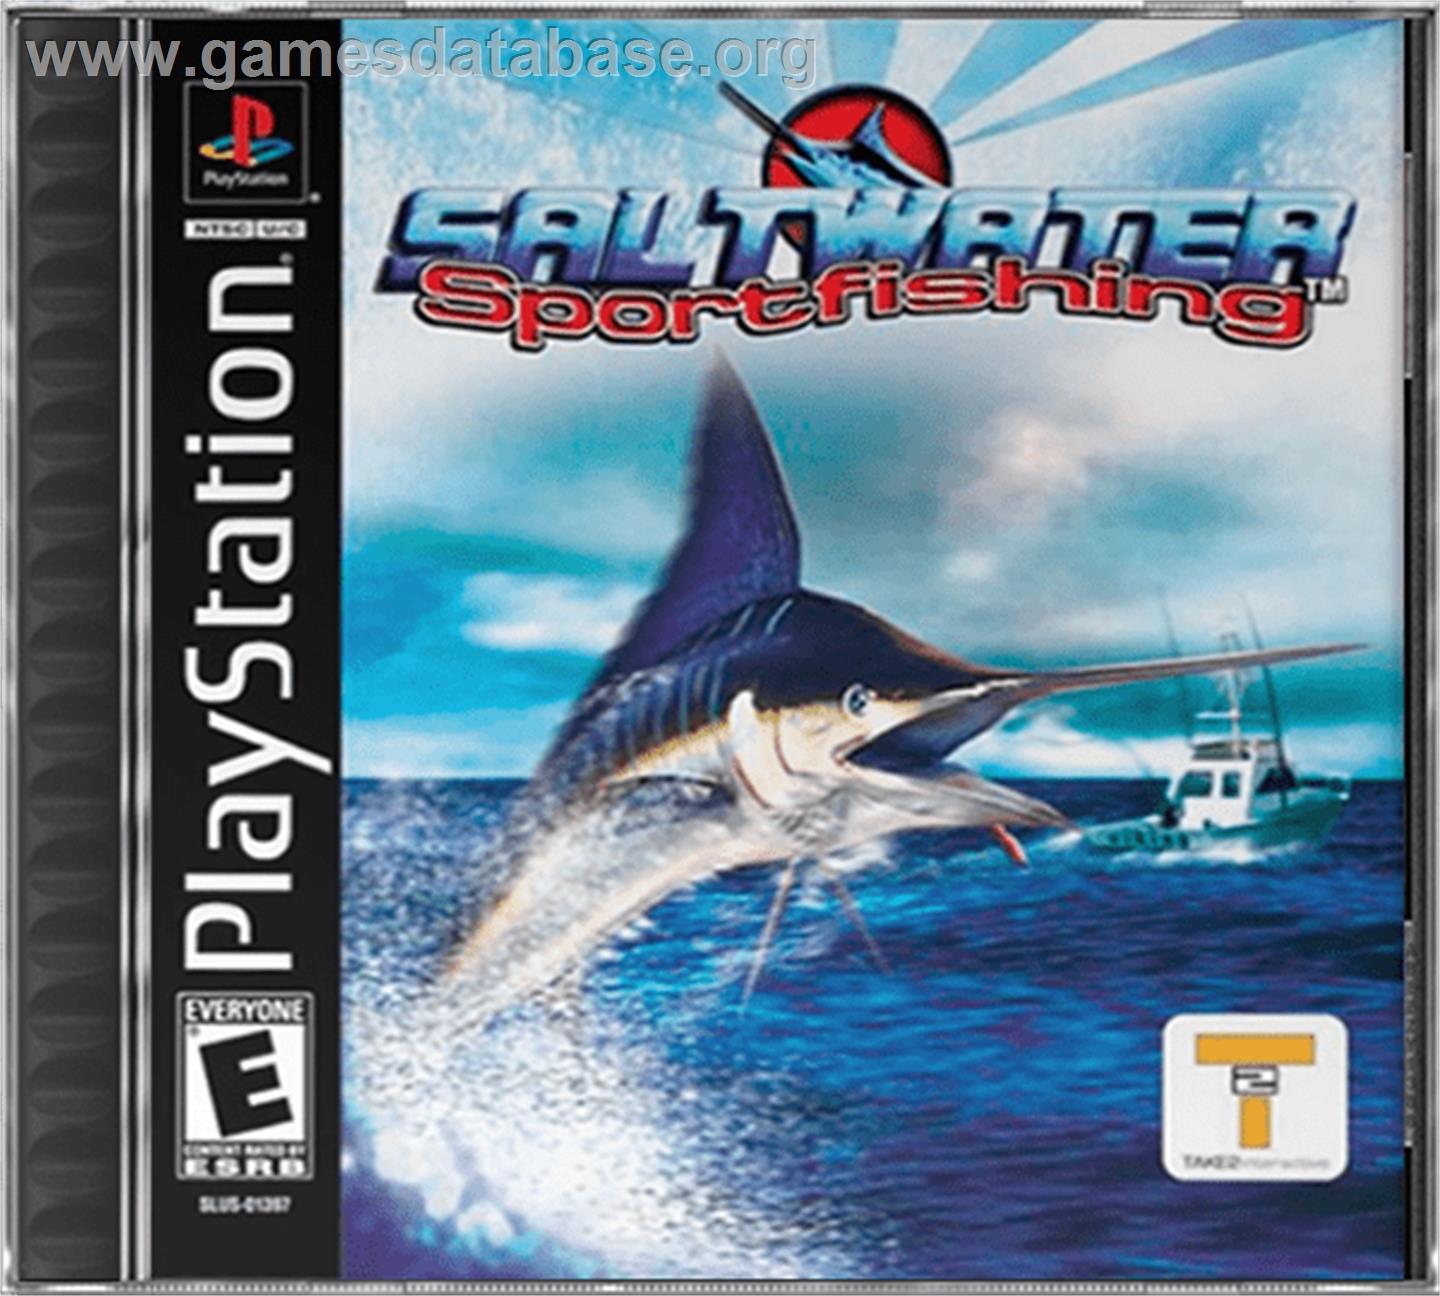 Saltwater Sportfishing - Sony Playstation - Artwork - Box